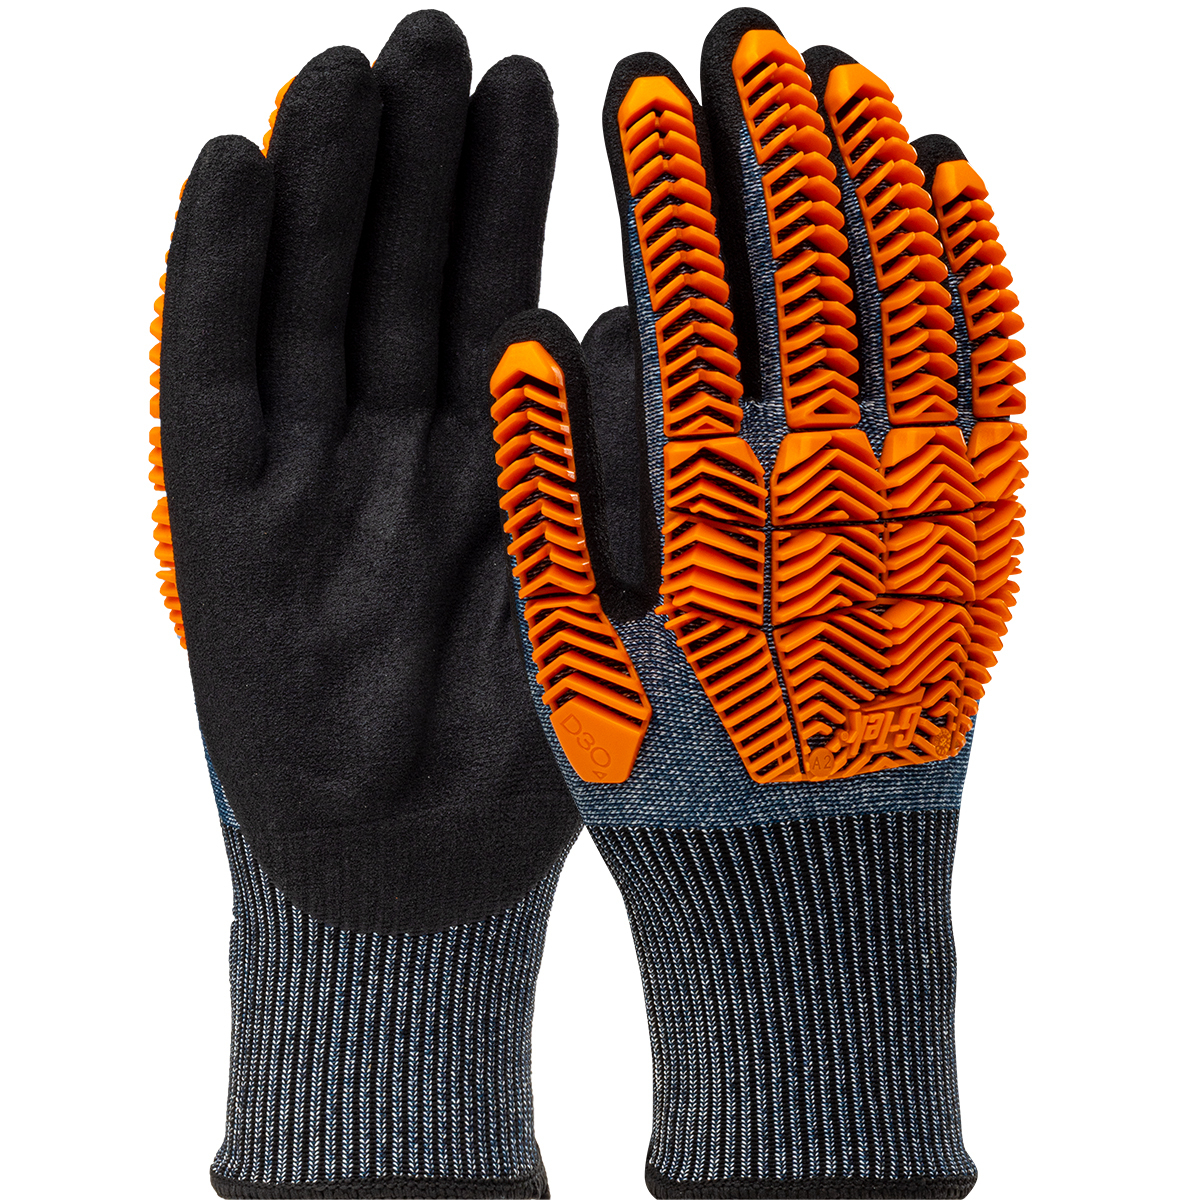 G-TEK POLYKOR D3O IMPACT GLOVE - Tagged Gloves